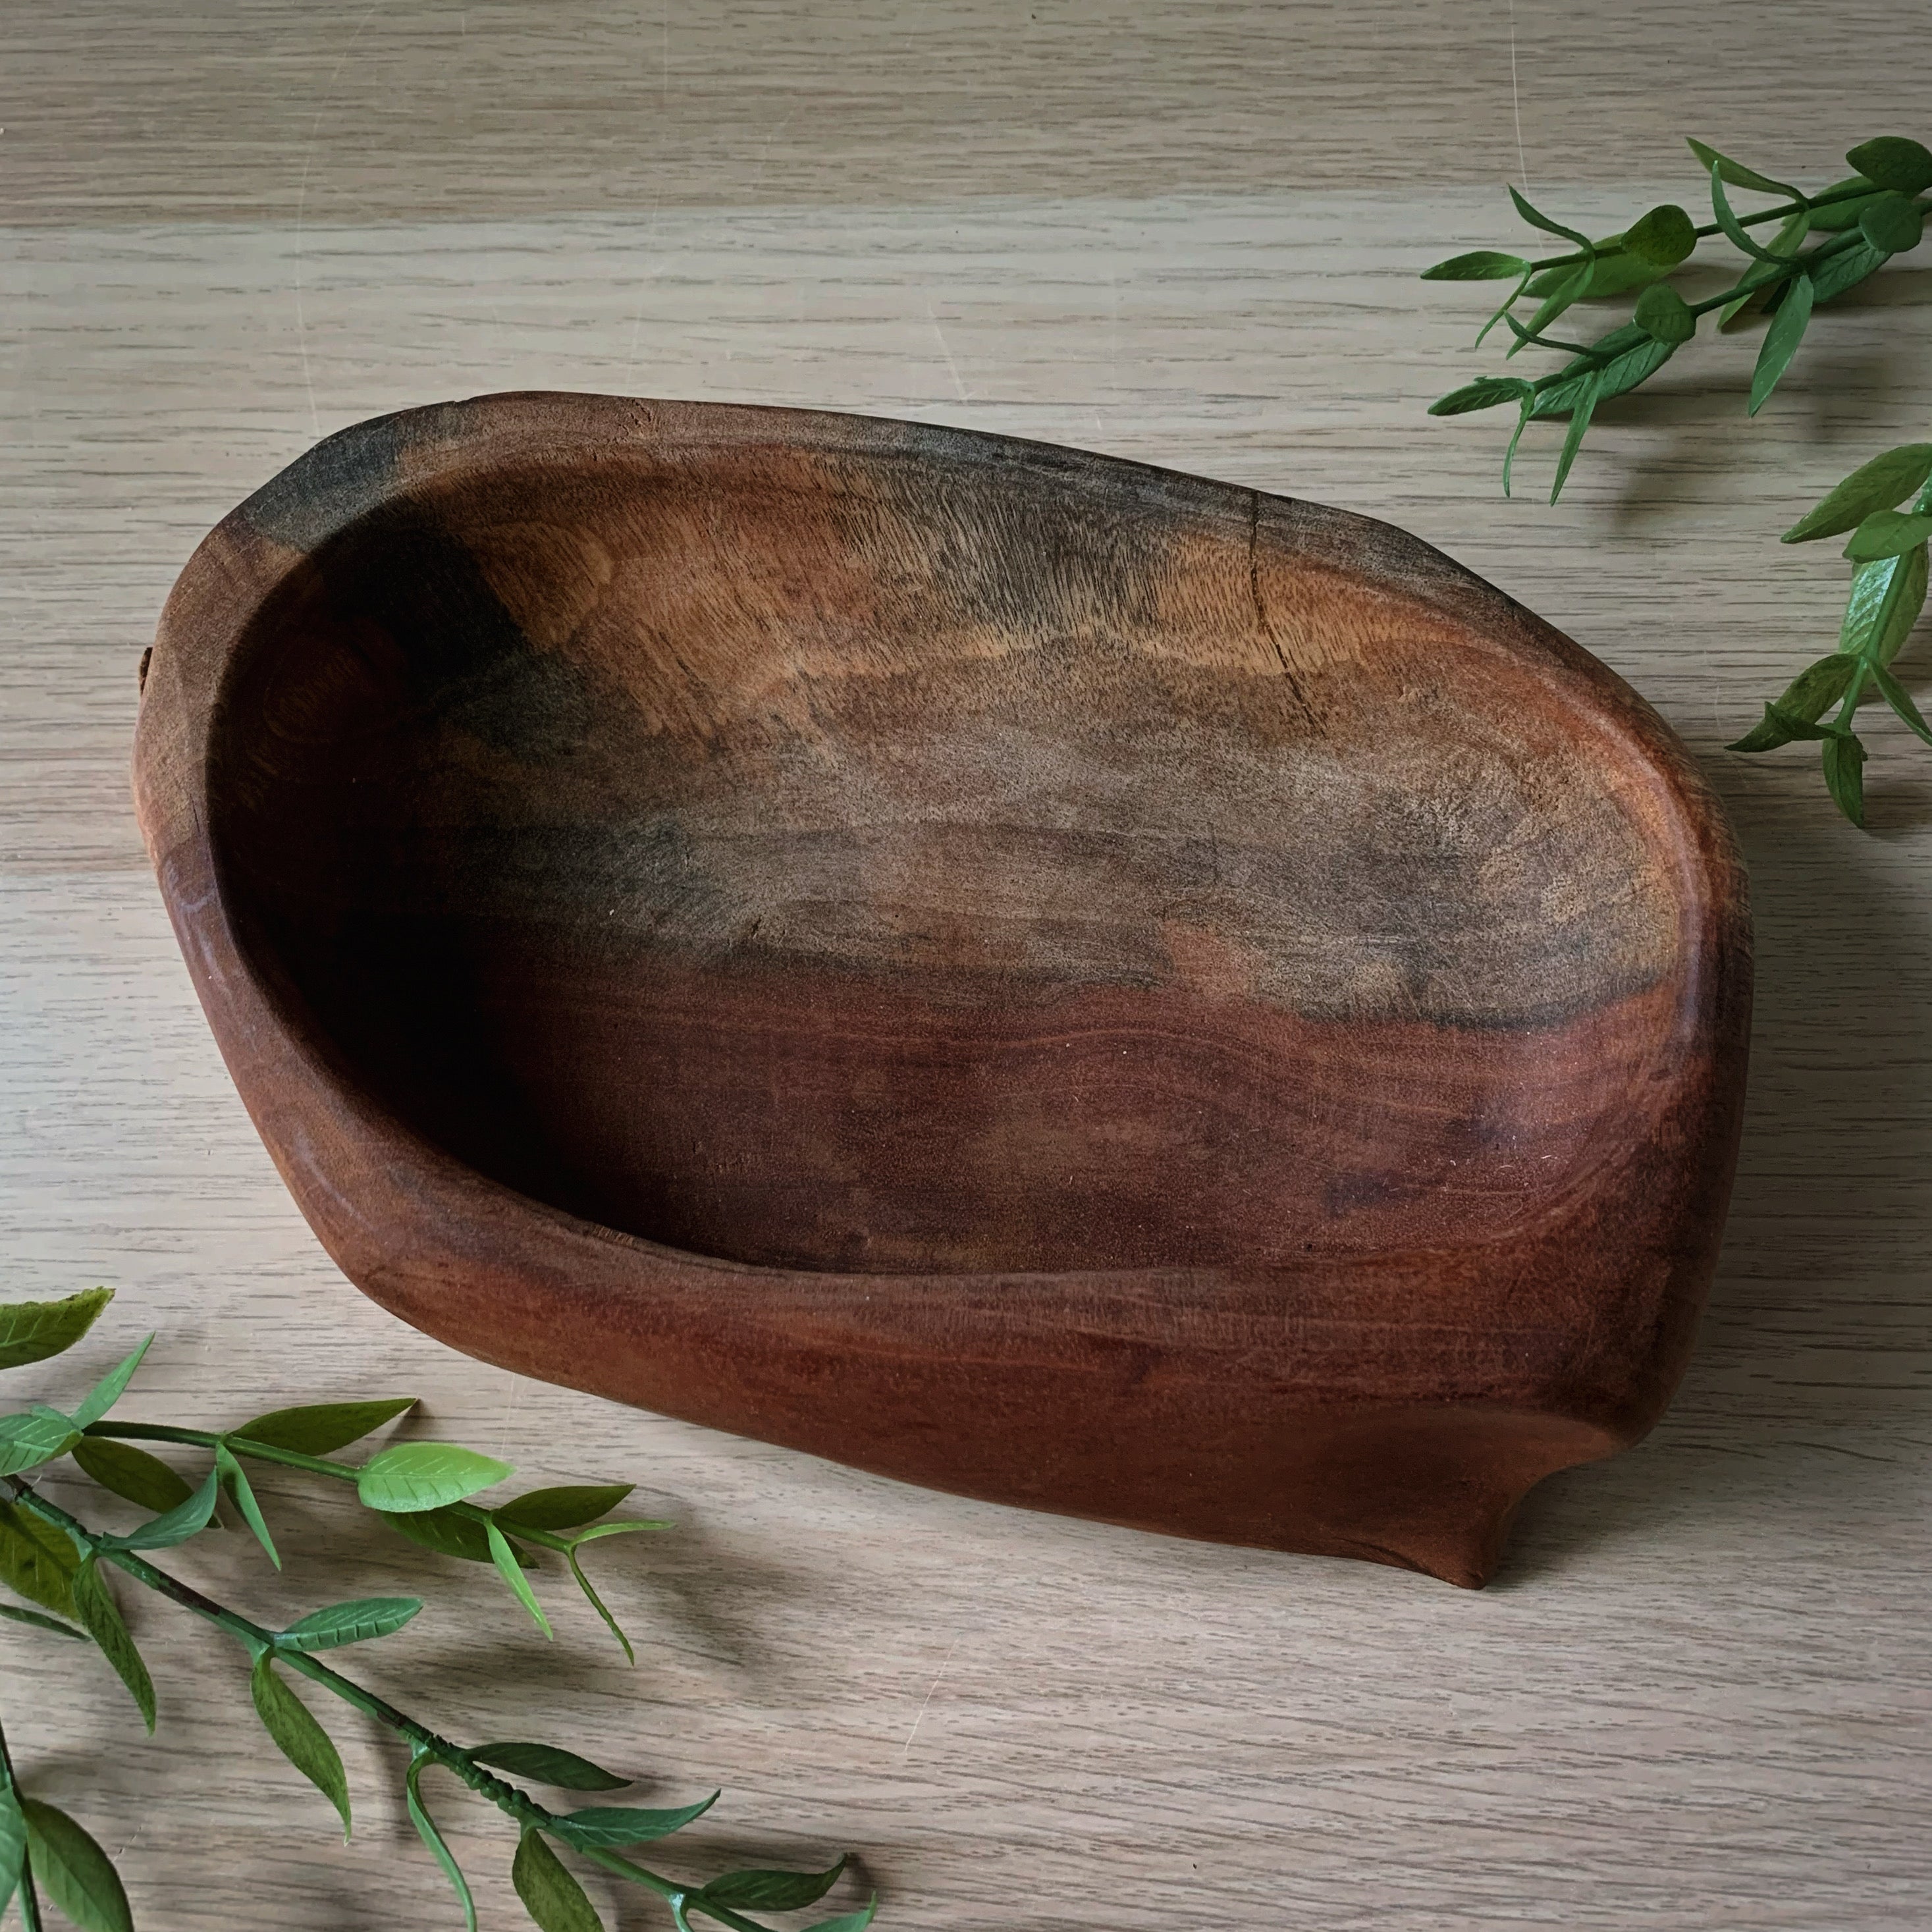 Rustic Wooden Bowl #1